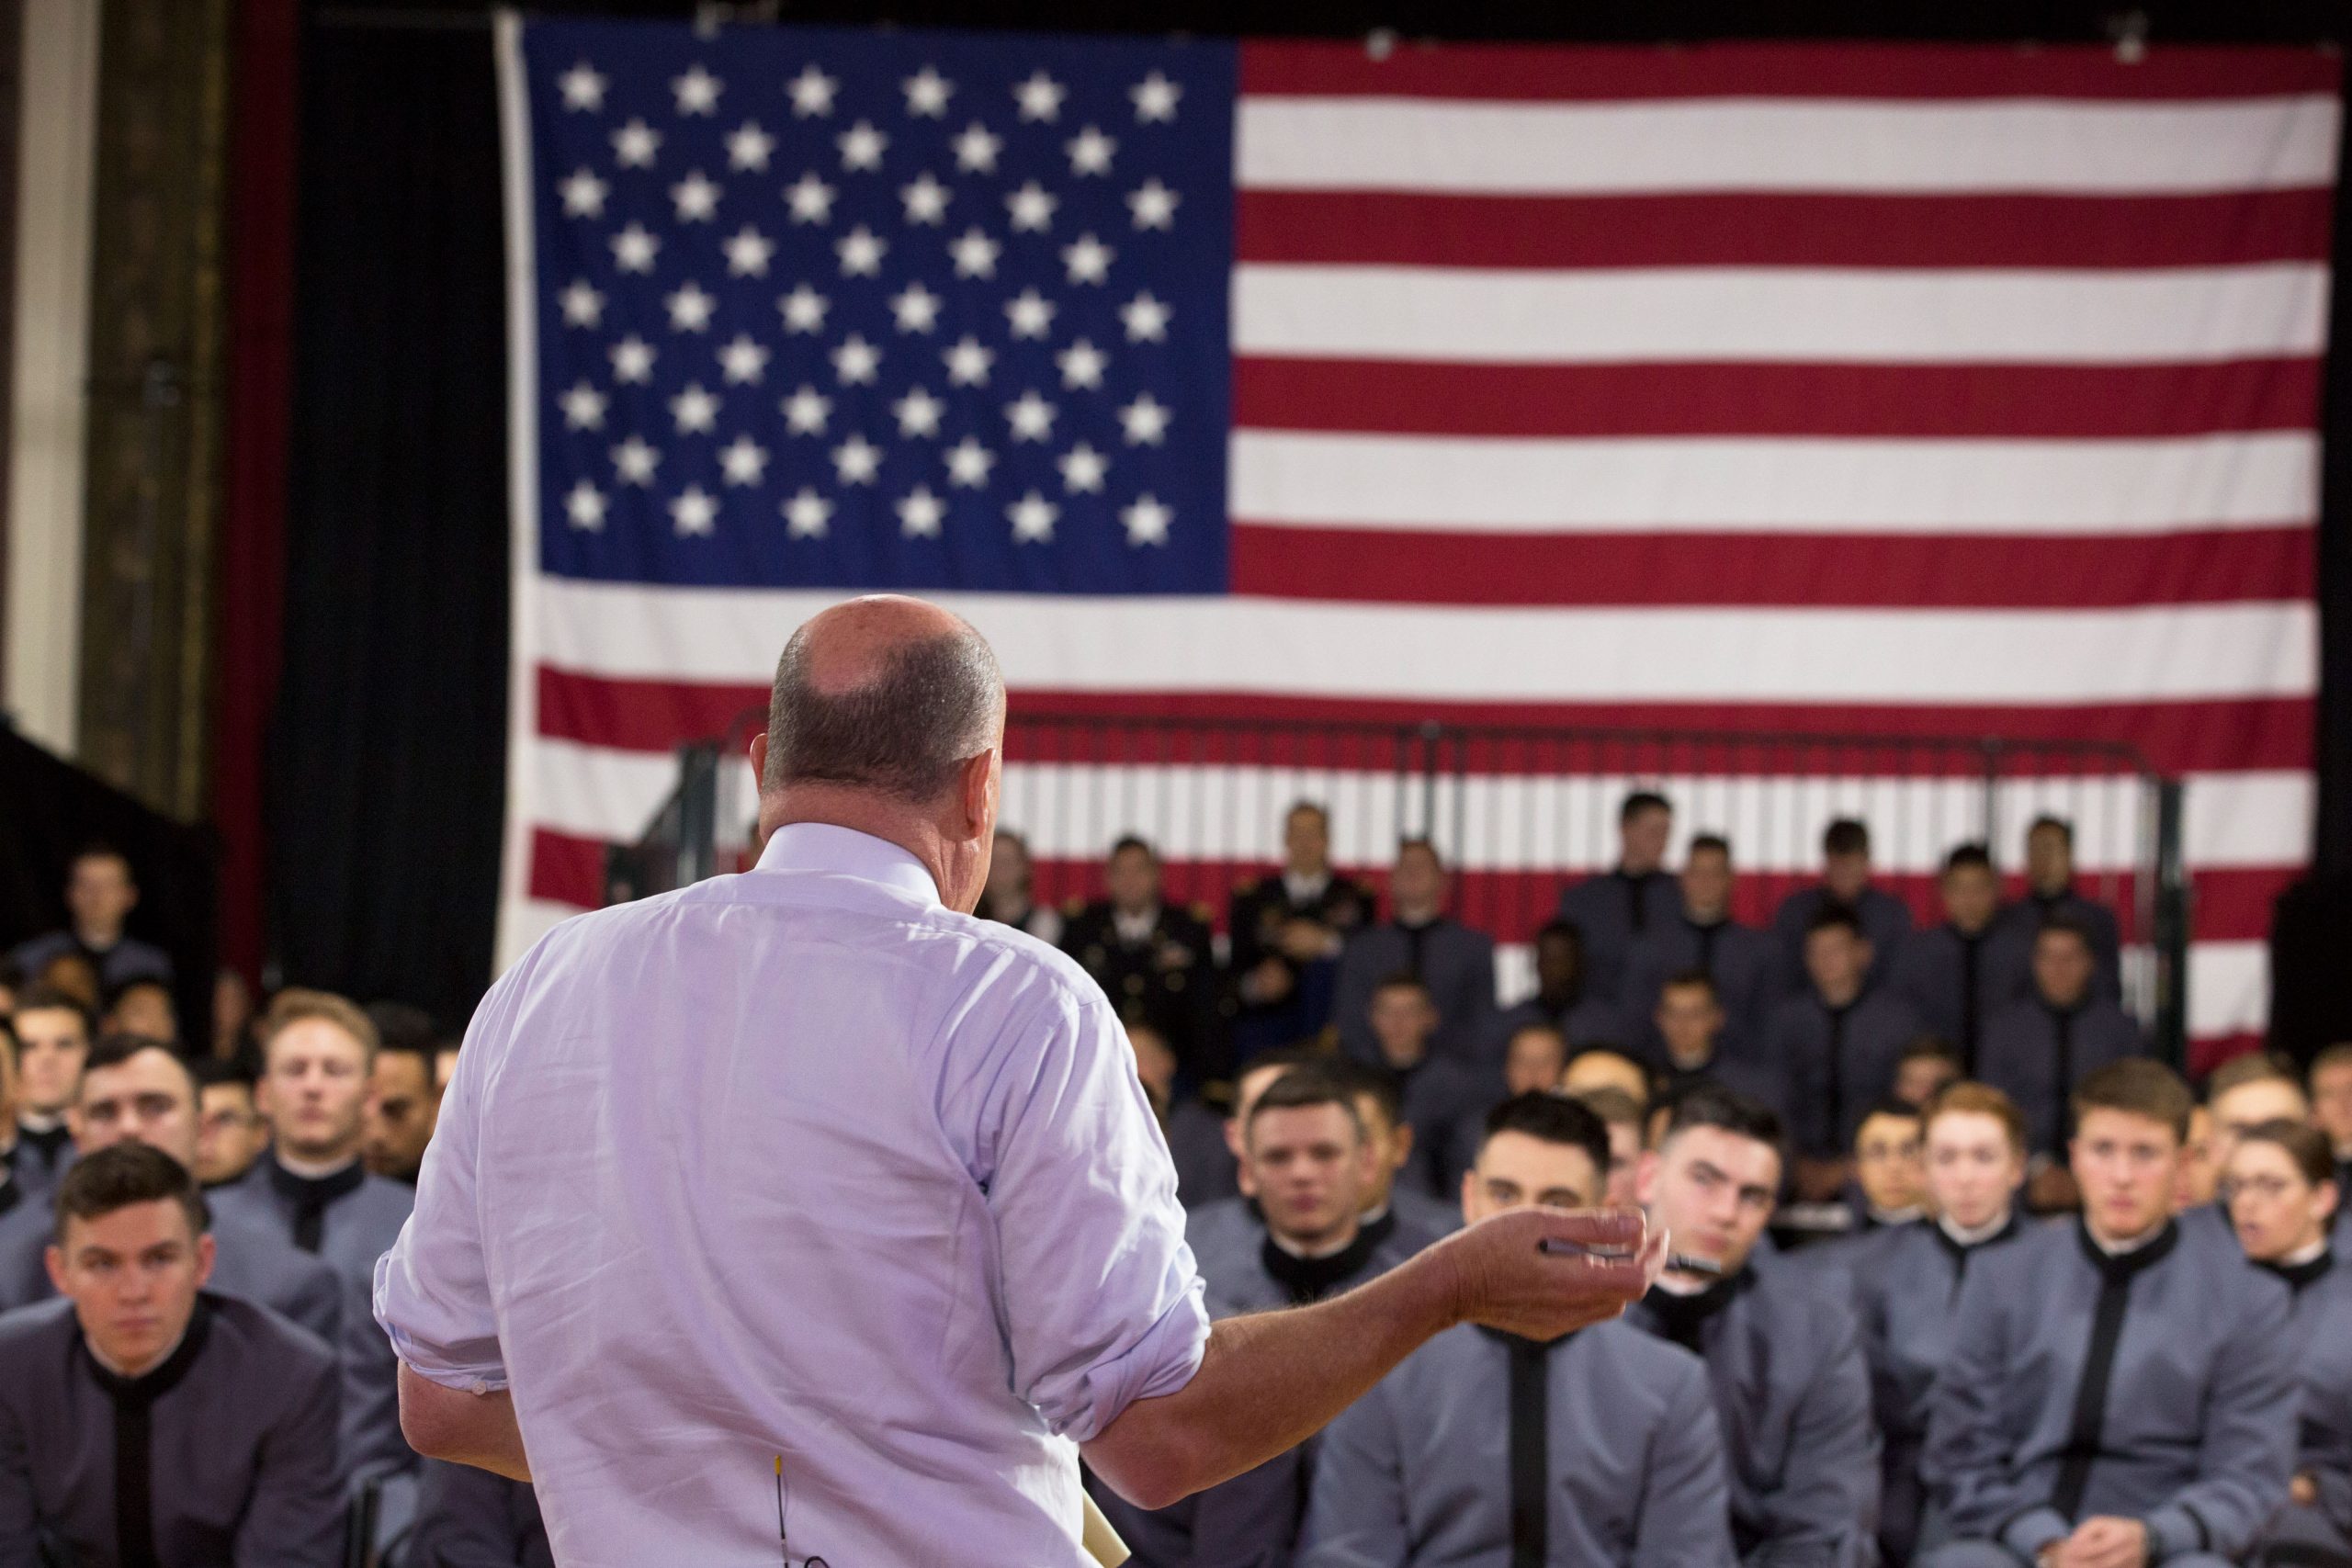 Jim Cramer promotes hiring army veterans: ‘It is good enterprise’